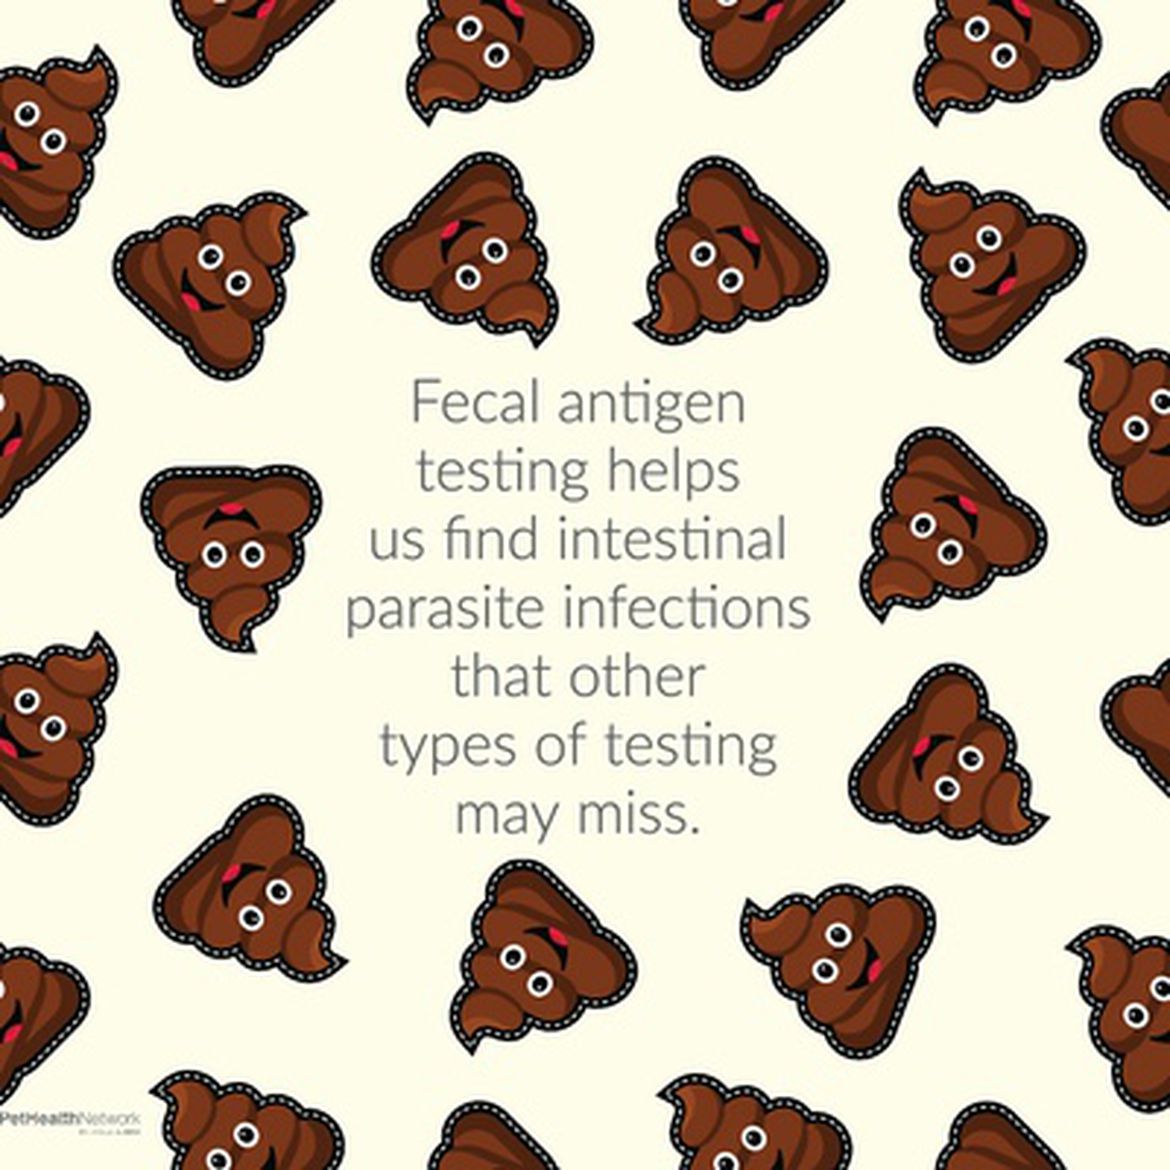 Social media post on how fecal antigen testing helps.